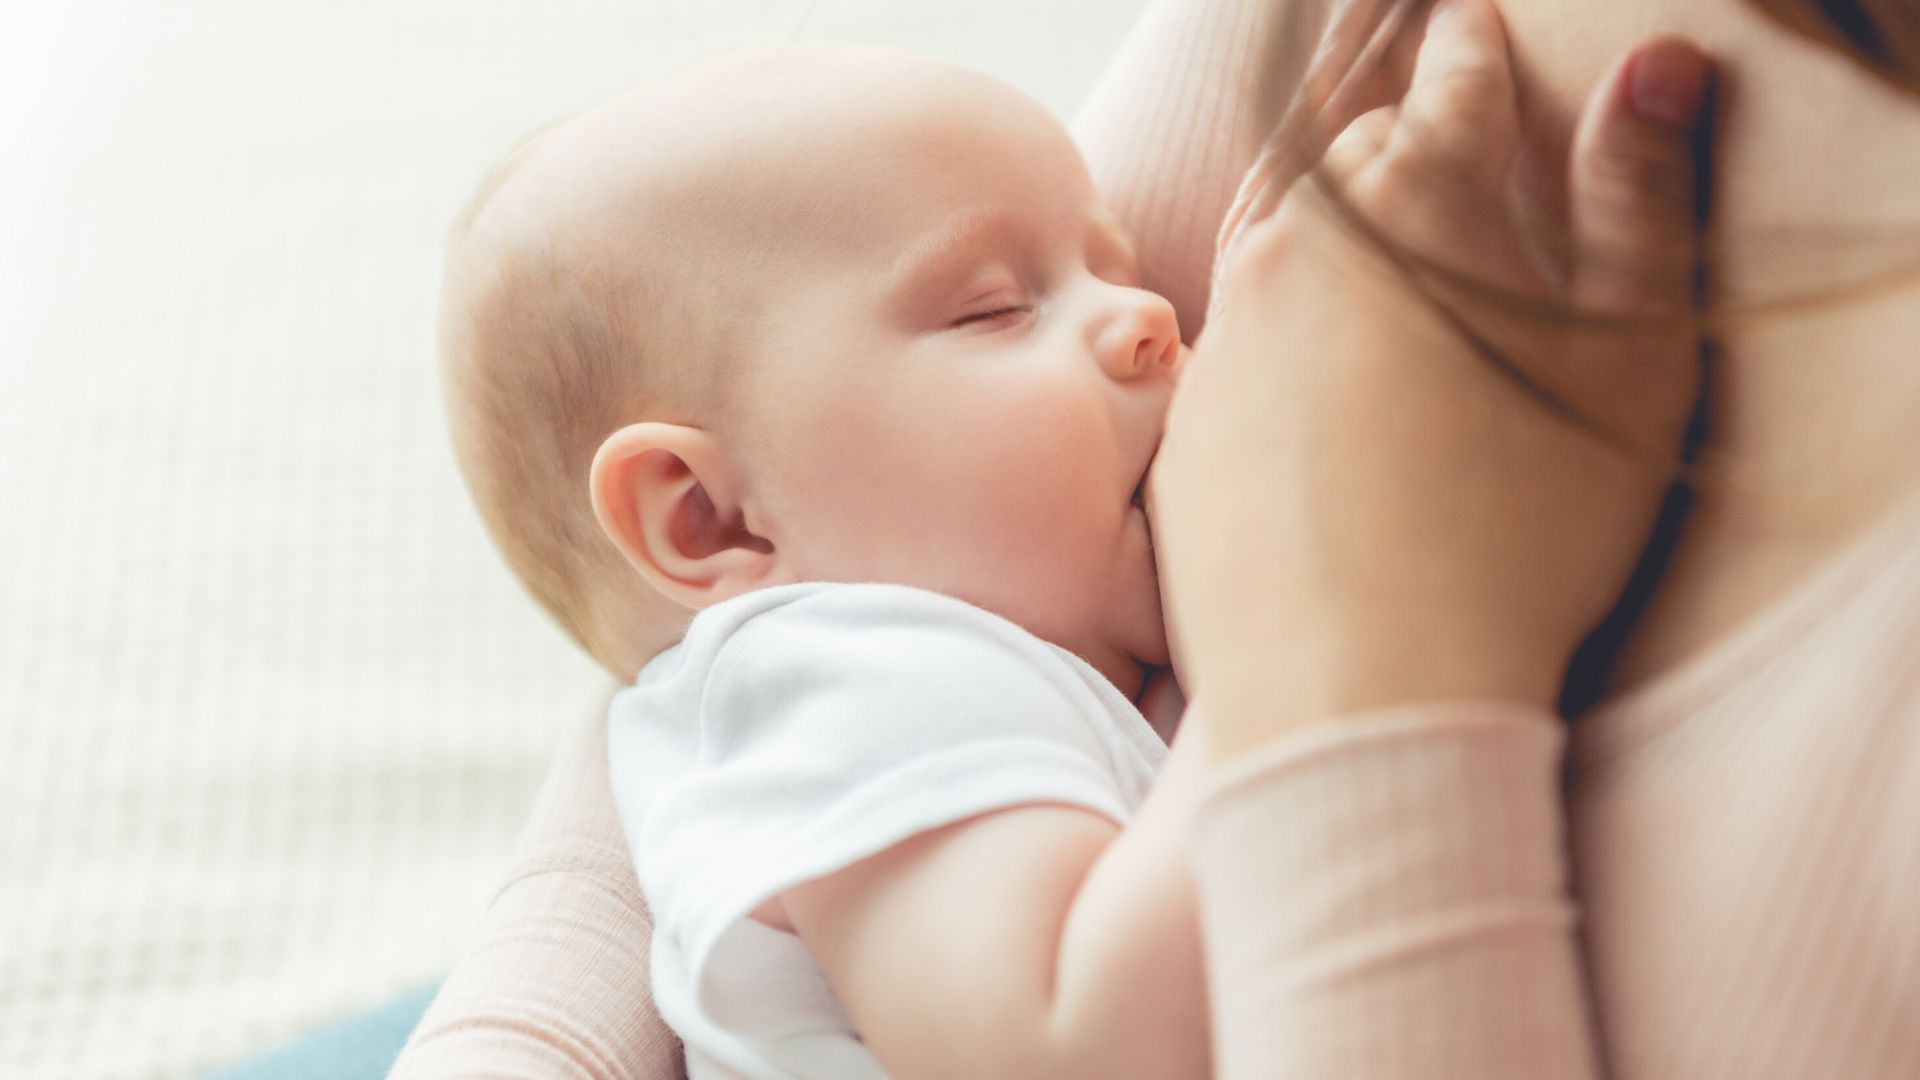 Nipple care for breastfeeding mums, Breast care